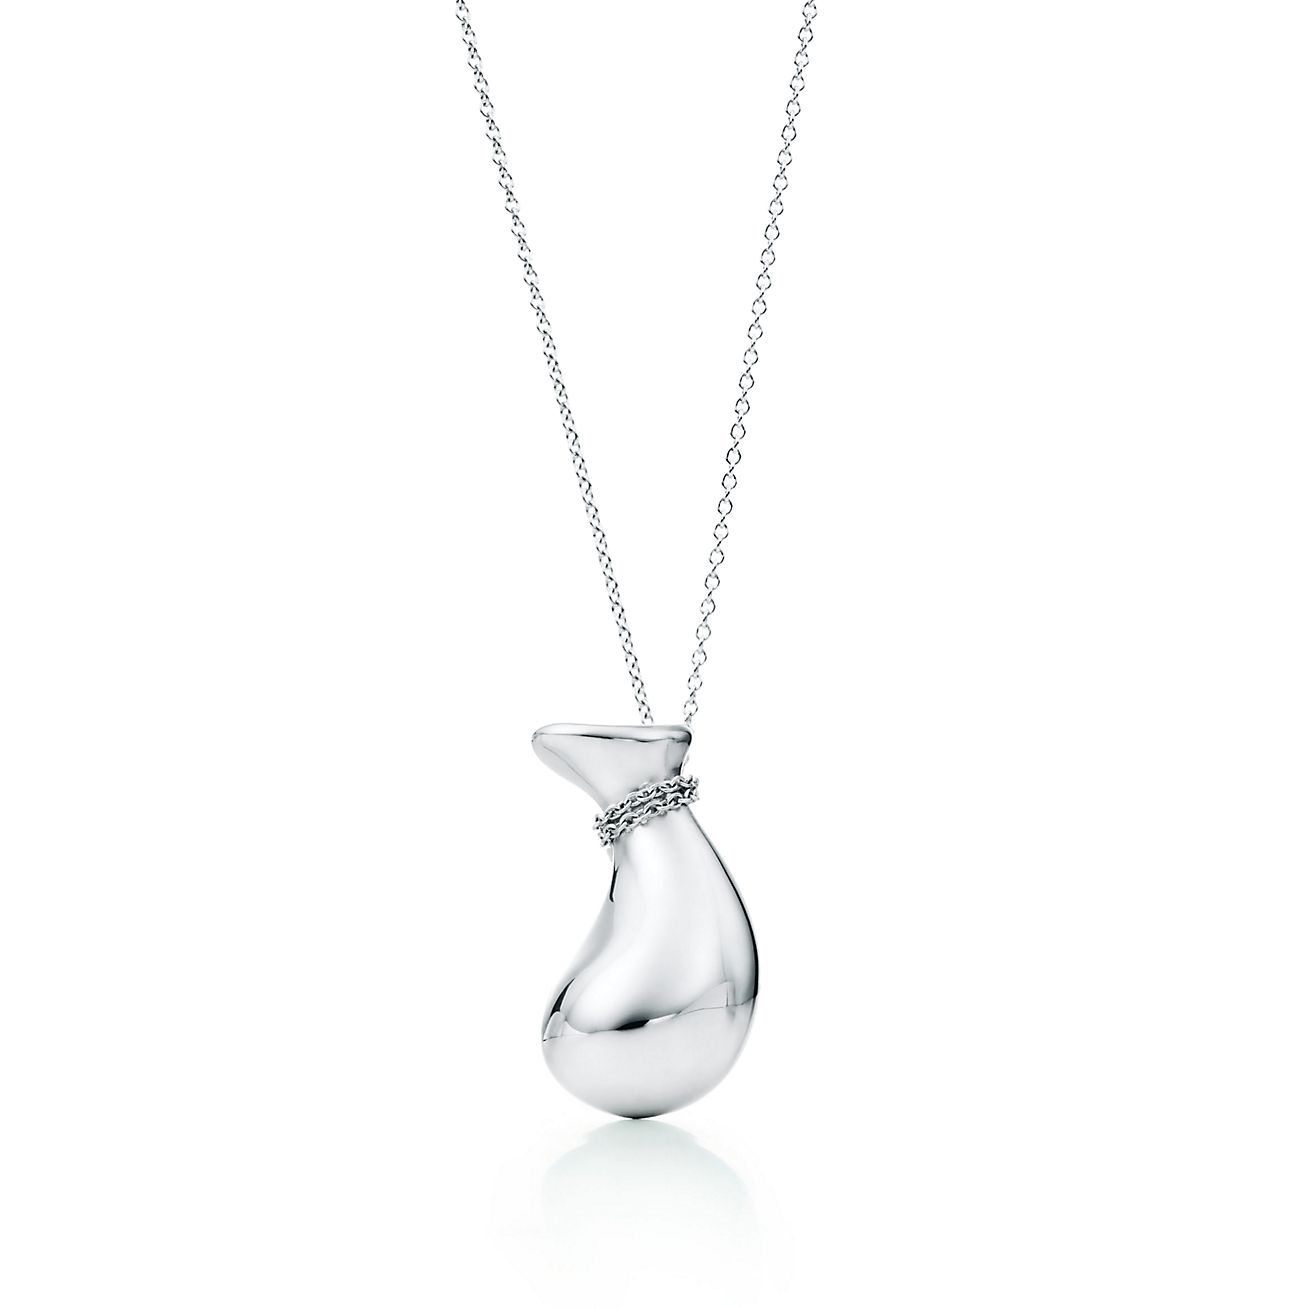 Elegant Tiffany & Co. Elsa Peretti Small Jug Necklace